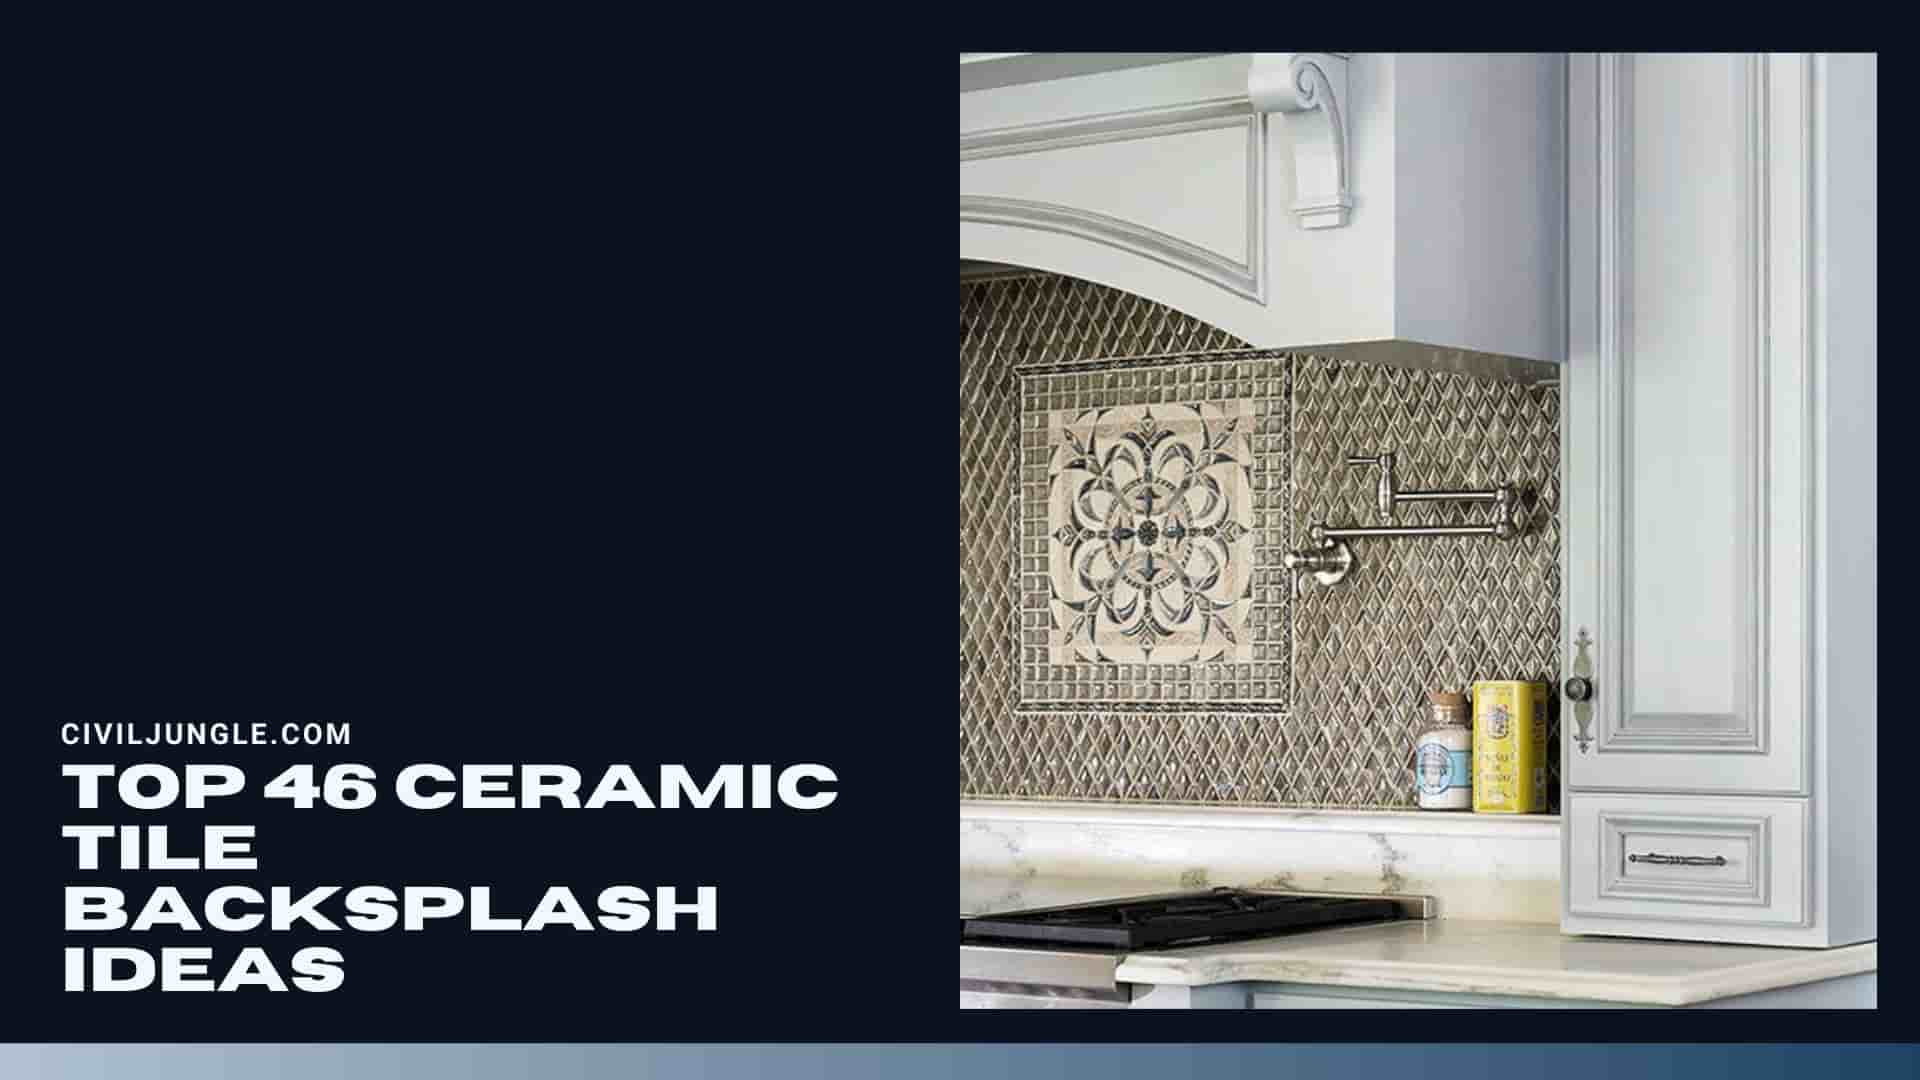 Top 46 Ceramic Tile Backsplash Ideas